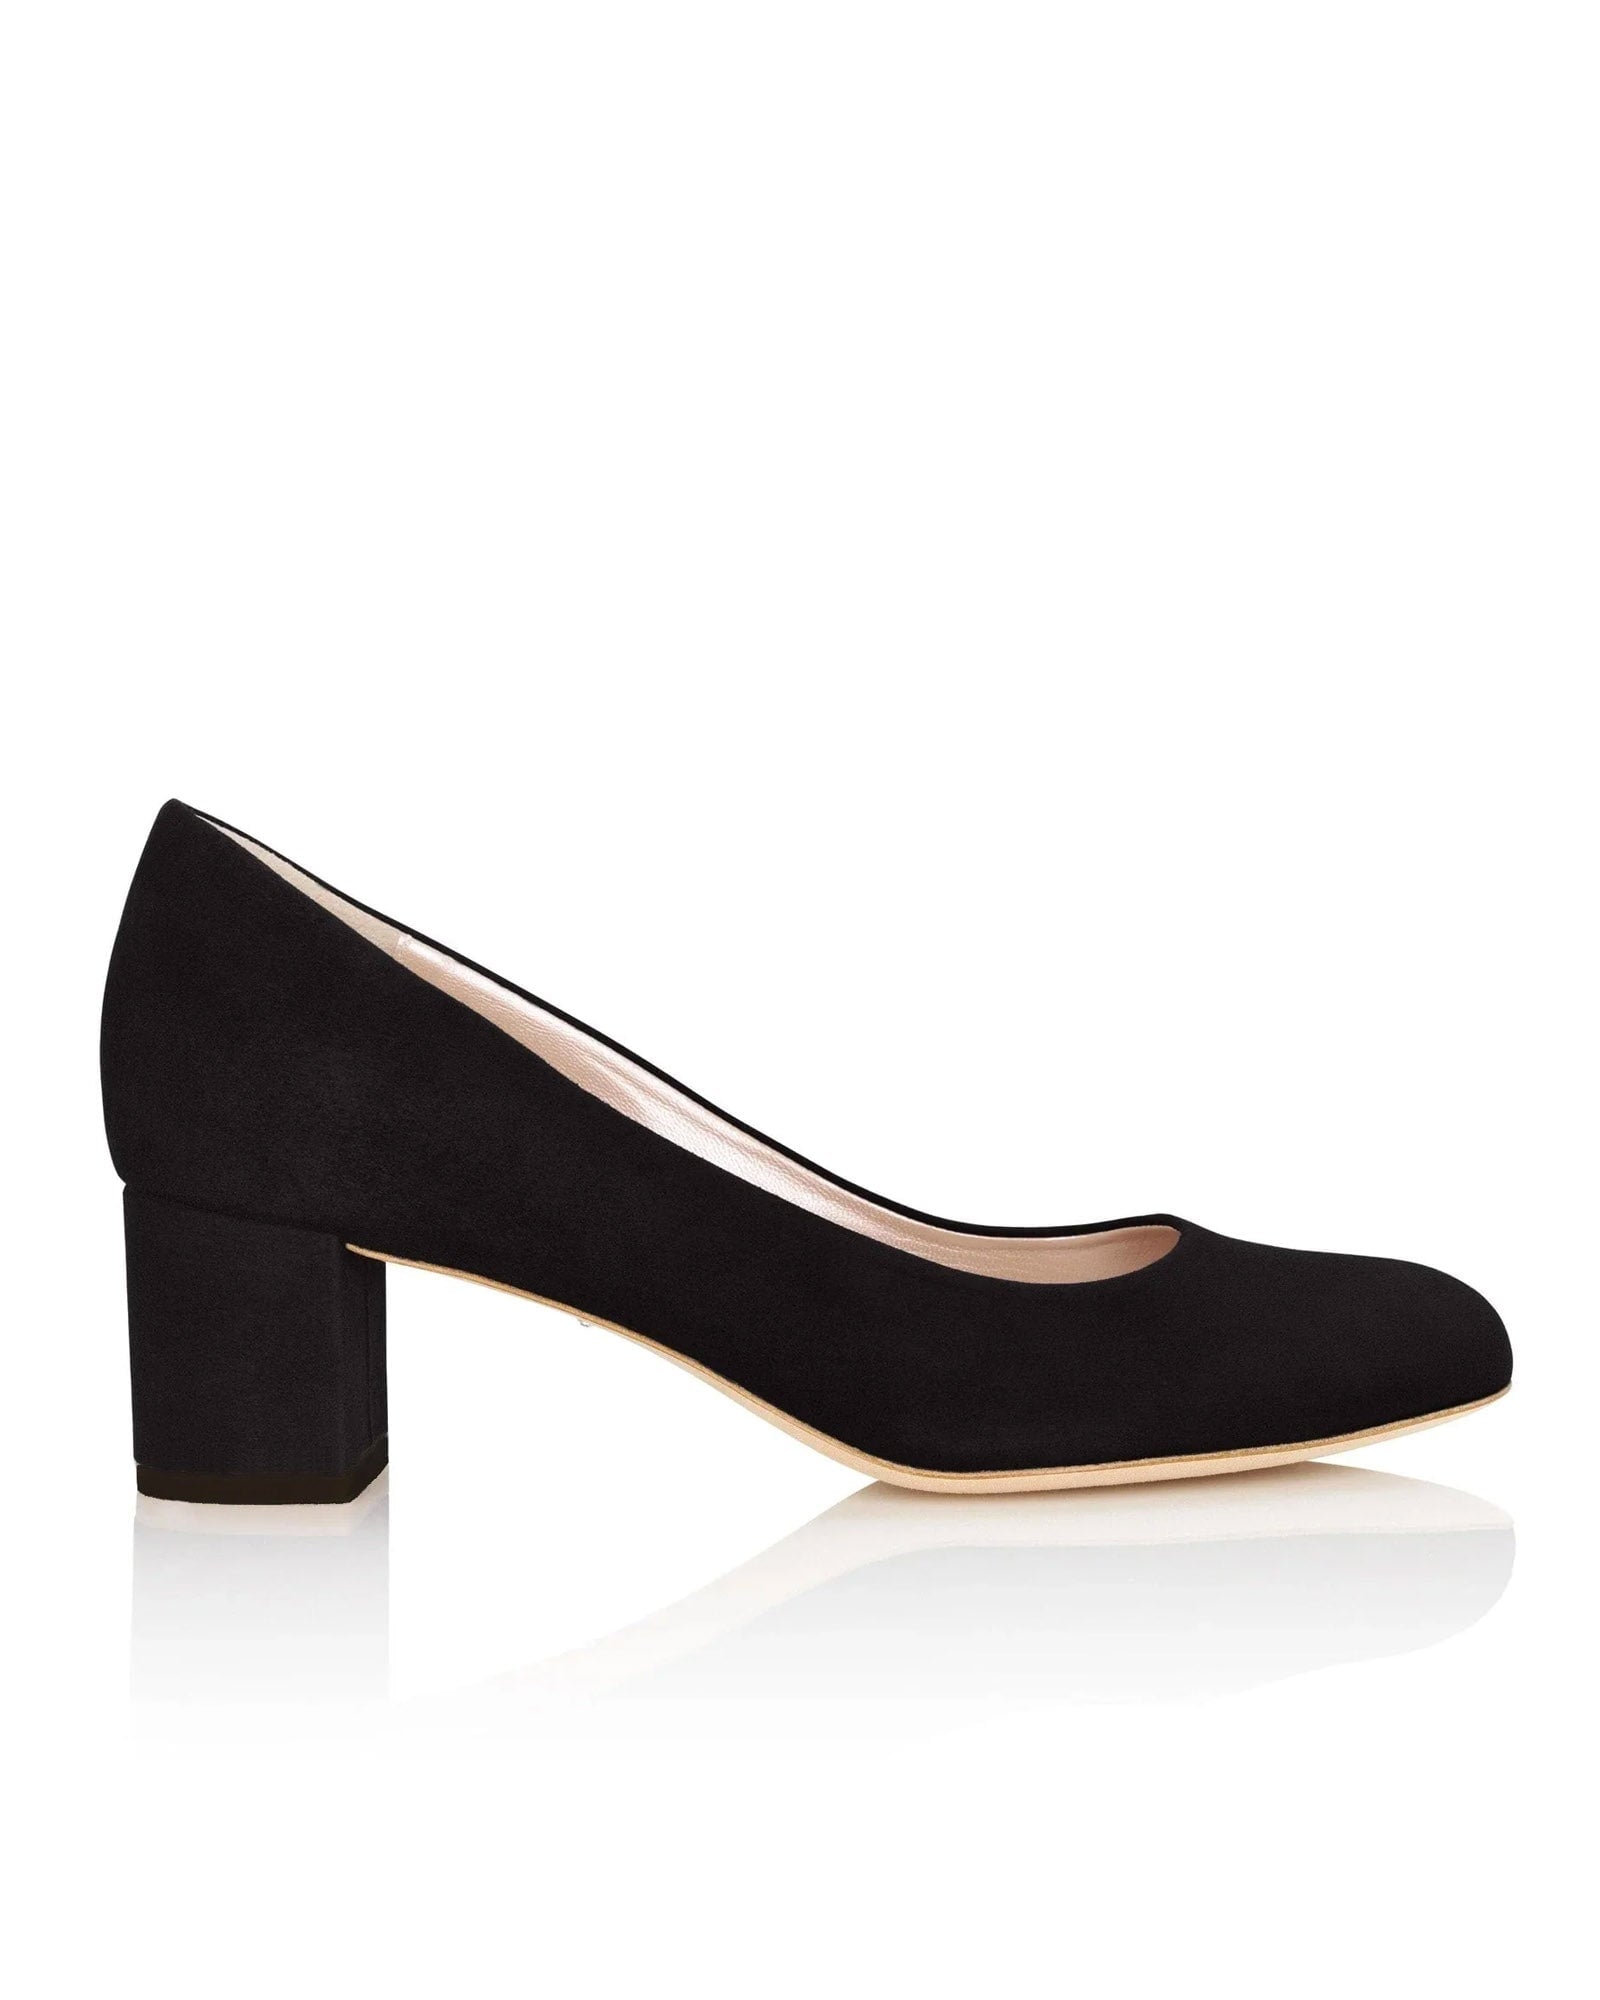 Buy Women's Formal Rhinestone High Heel Sandal Ankle Strap, Black-1, 10 at  Amazon.in